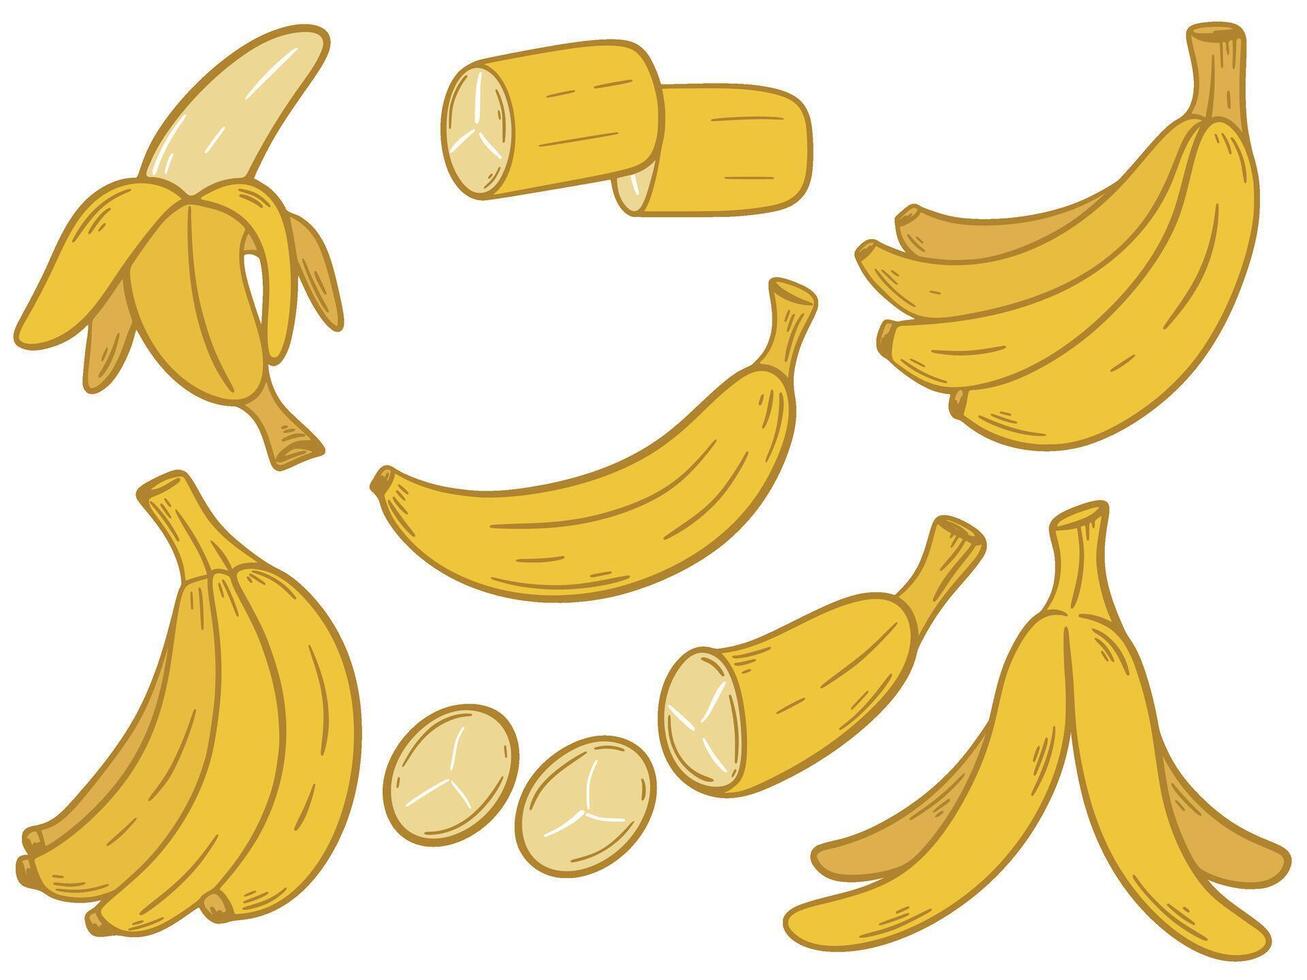 Hand drawn ripe bananas set, vector graphics